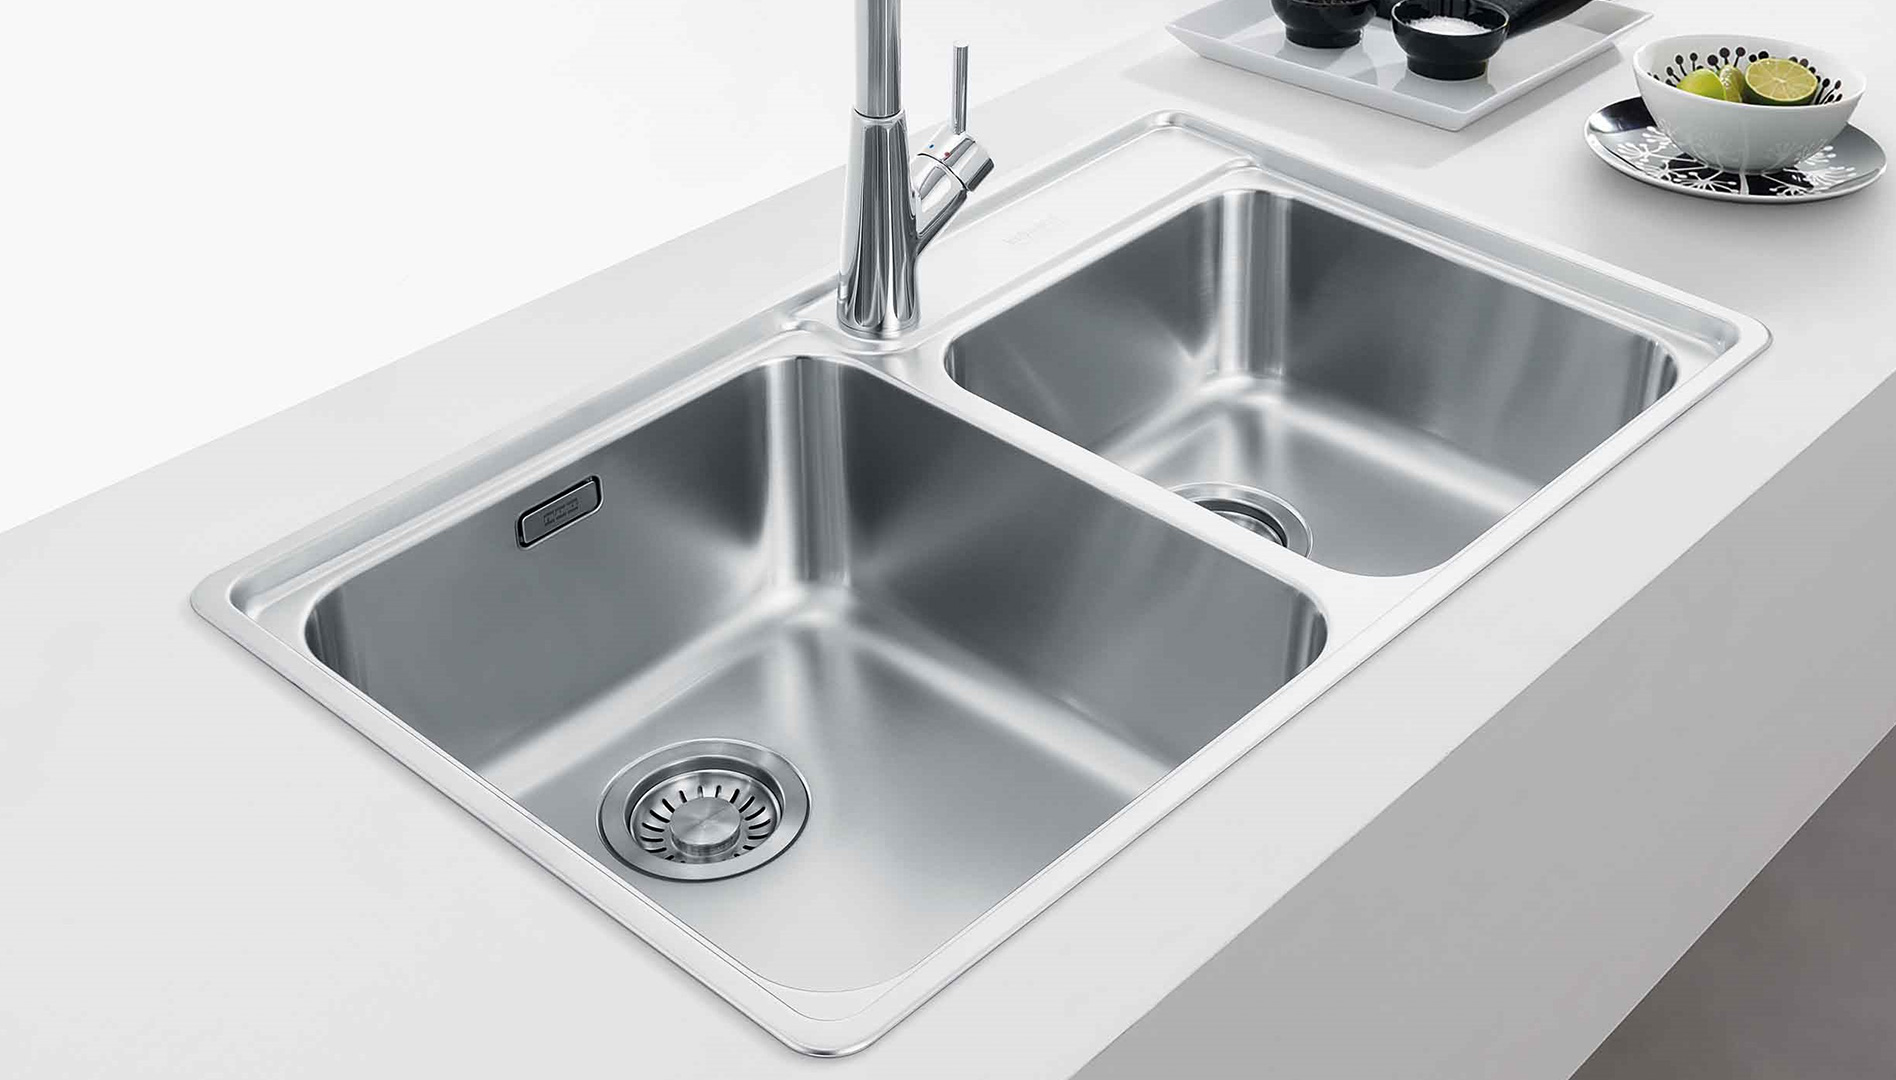 Key points for choosing stainless steel sinks: making kitchen “washing” easier